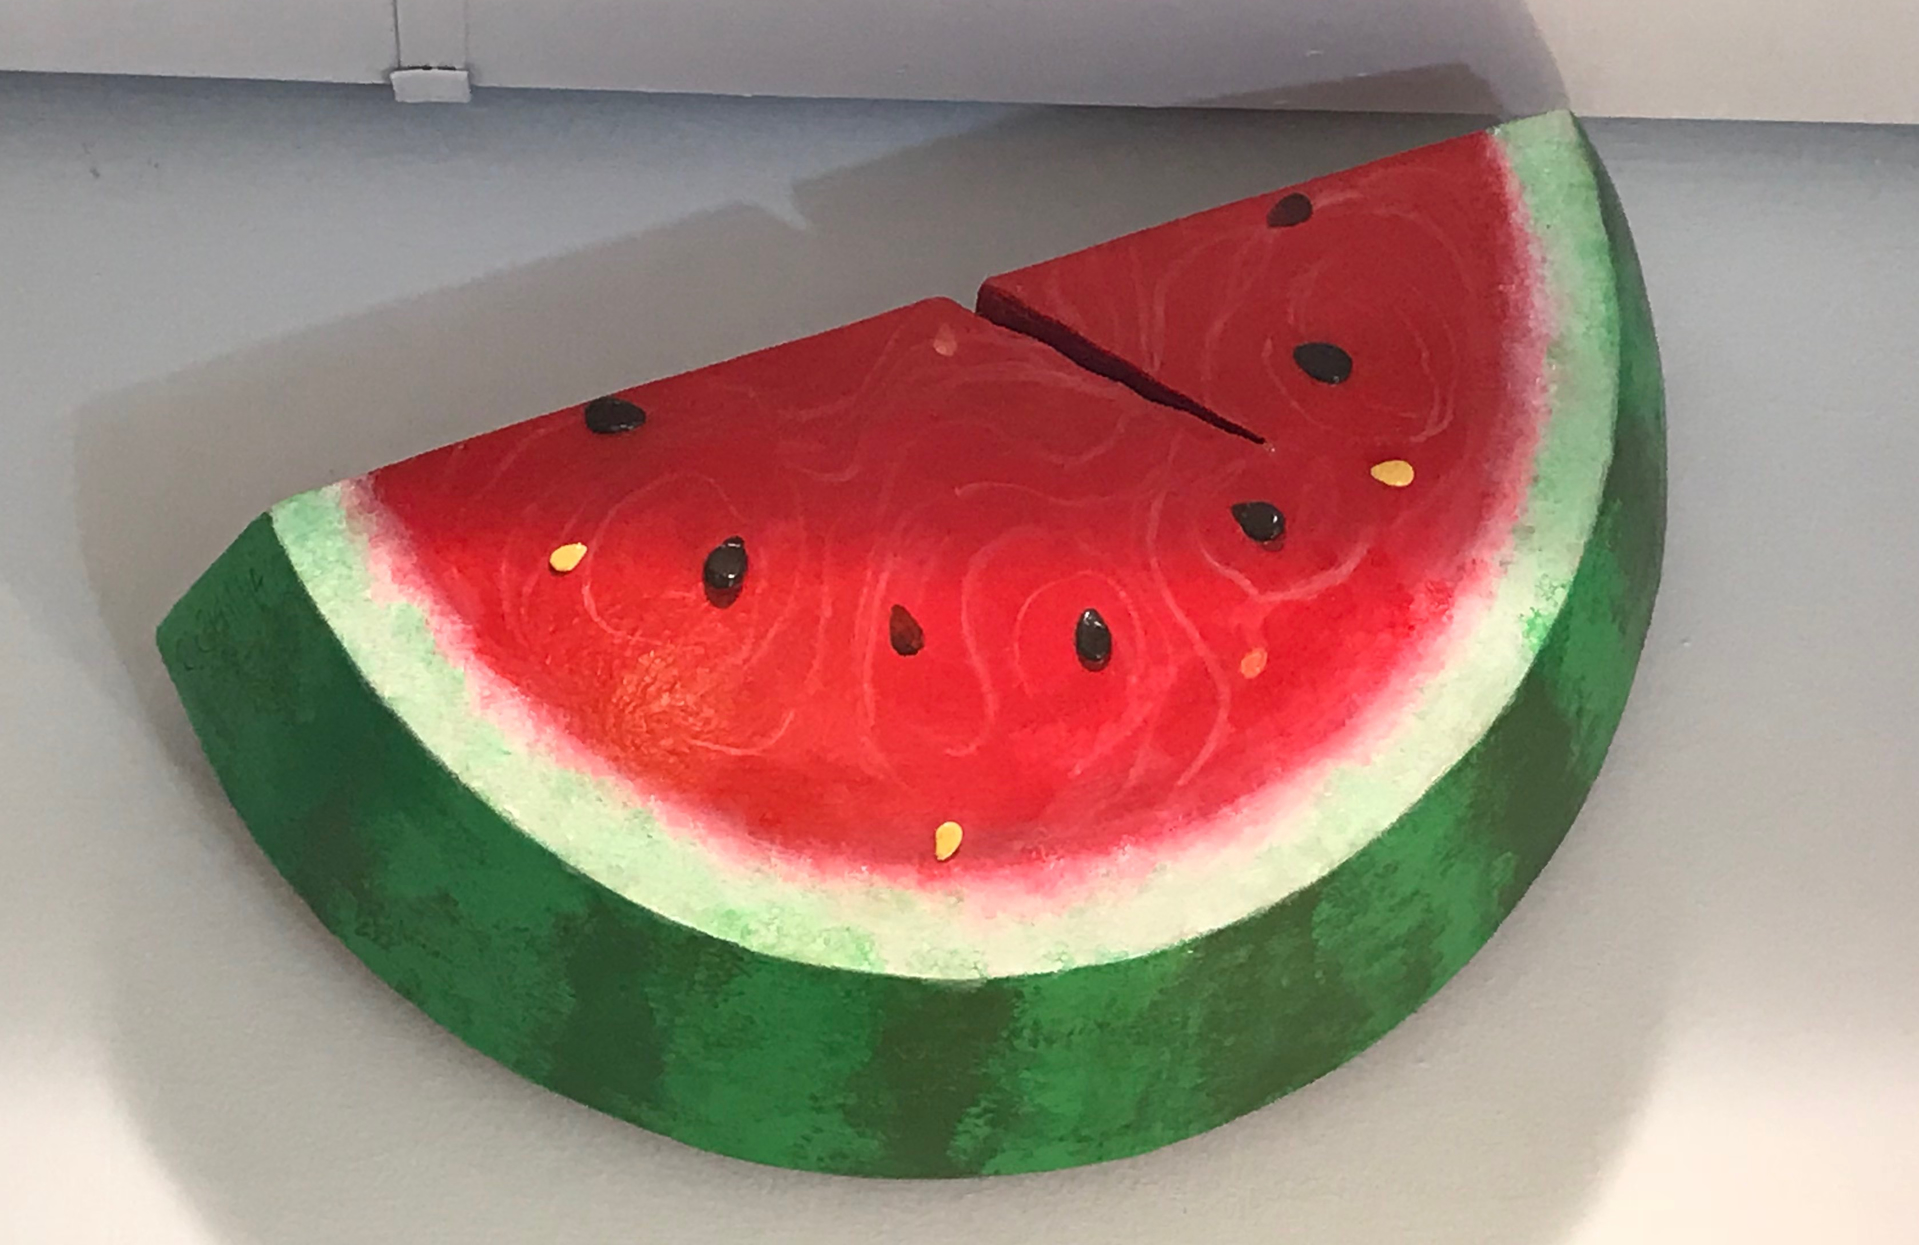 Slice of Melon by Rick Biehl